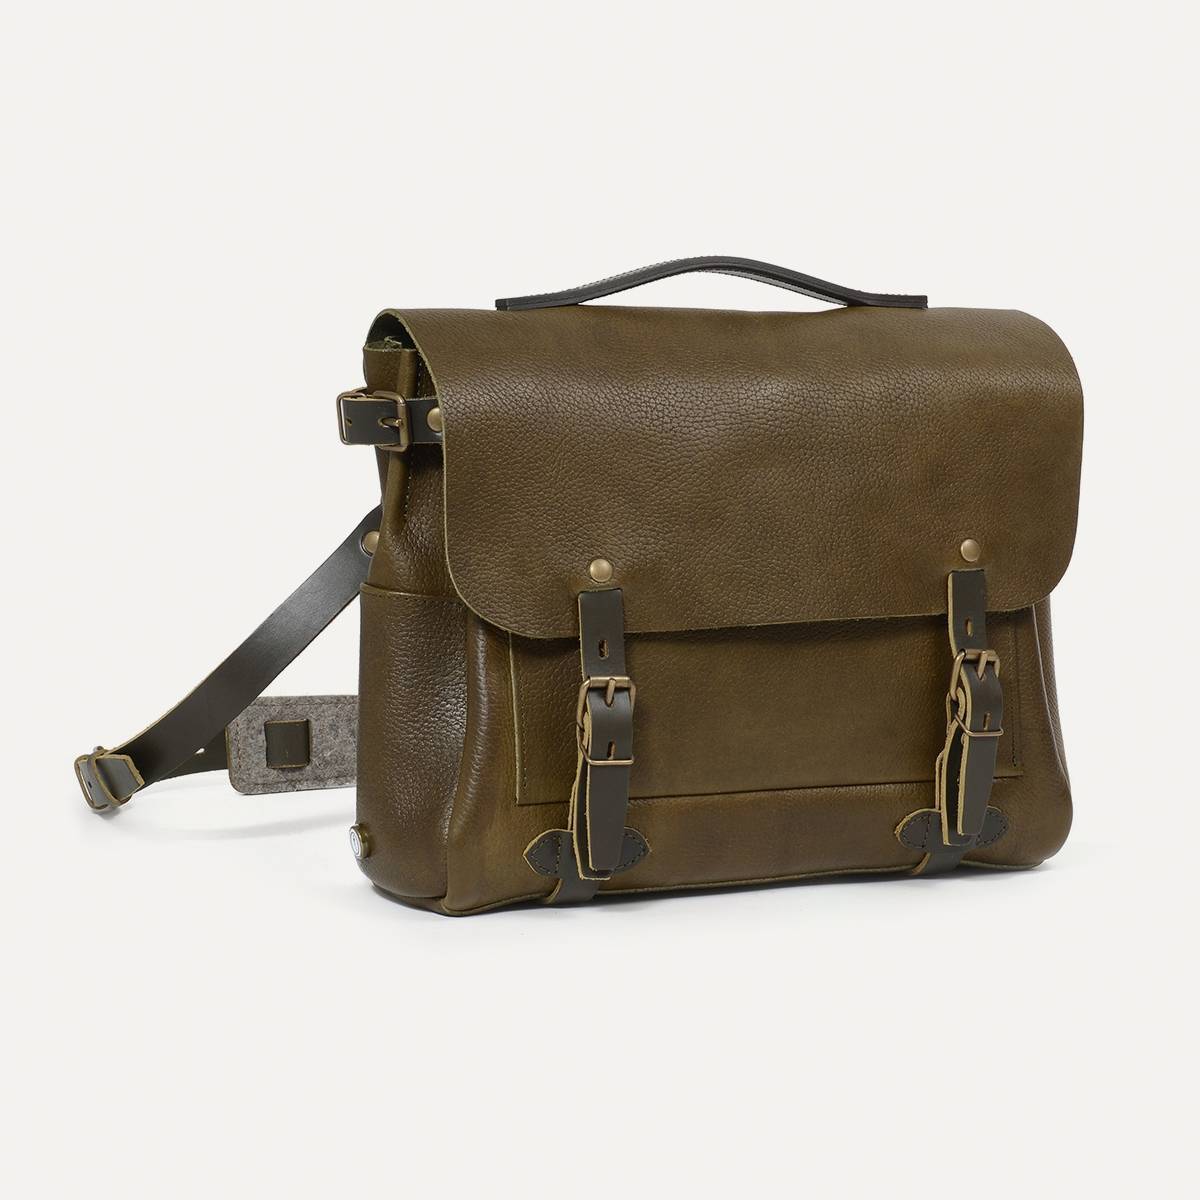 Eclair Postman Bag - Leather Satchel Bag Made in France